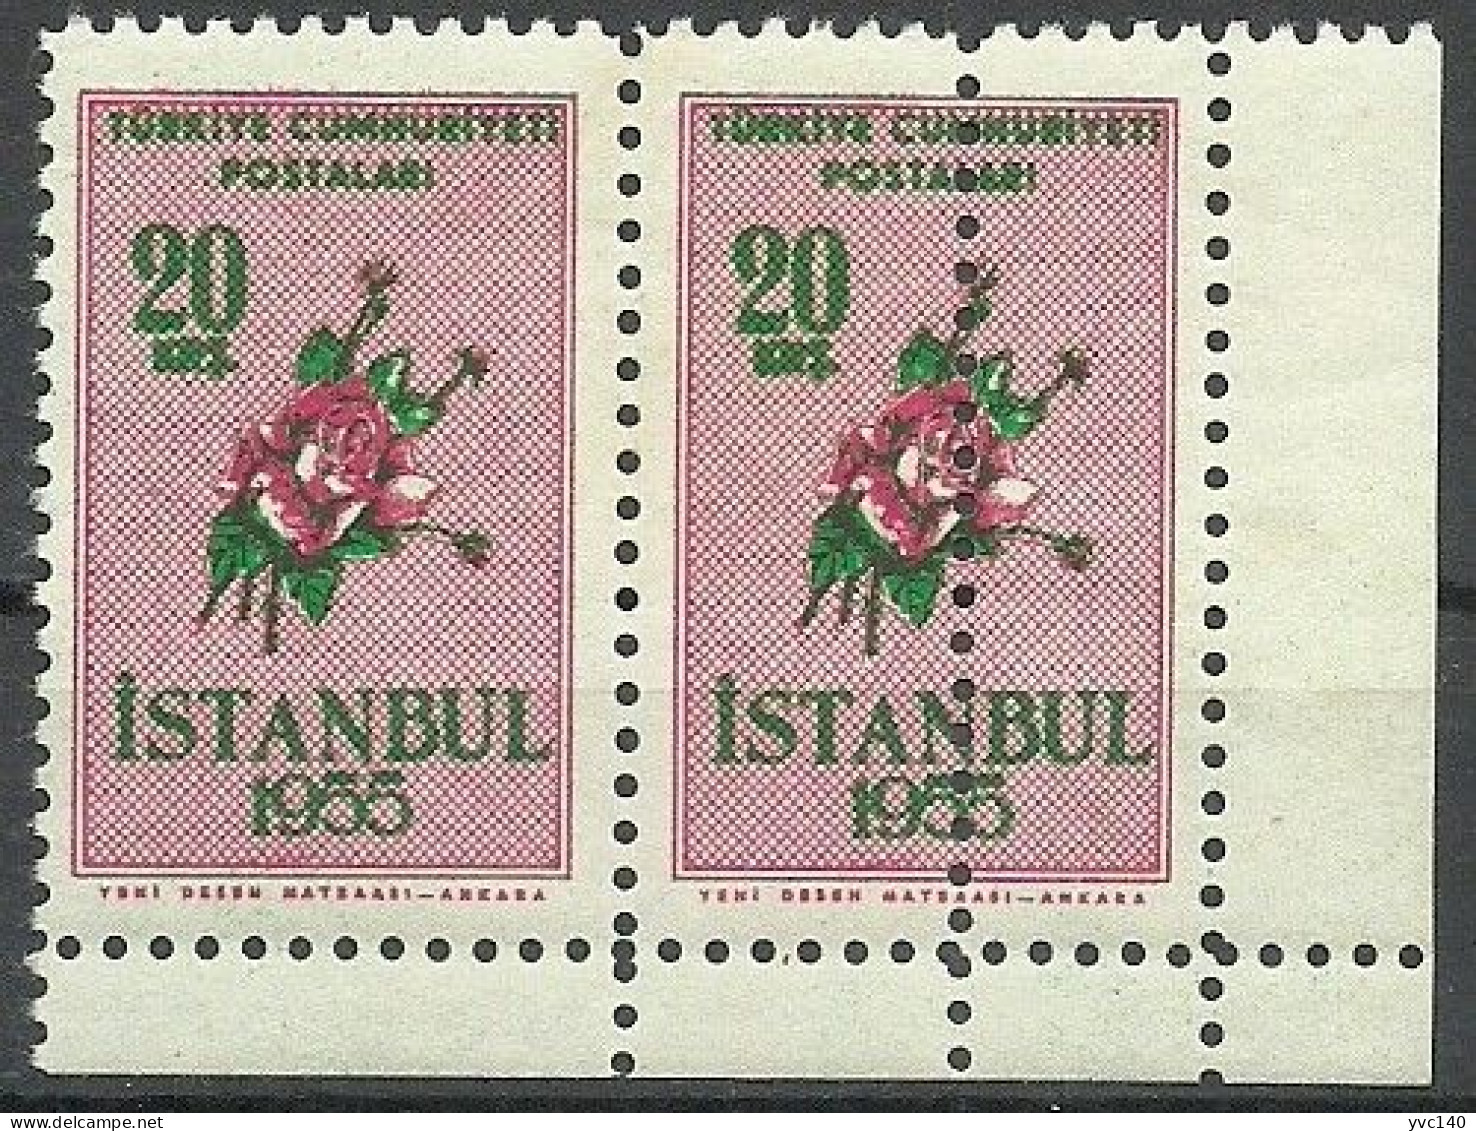 Turkey; 1955 Istanbul Spring And Flower Festivity 20 K. ERROR "Double Perf." - Ongebruikt